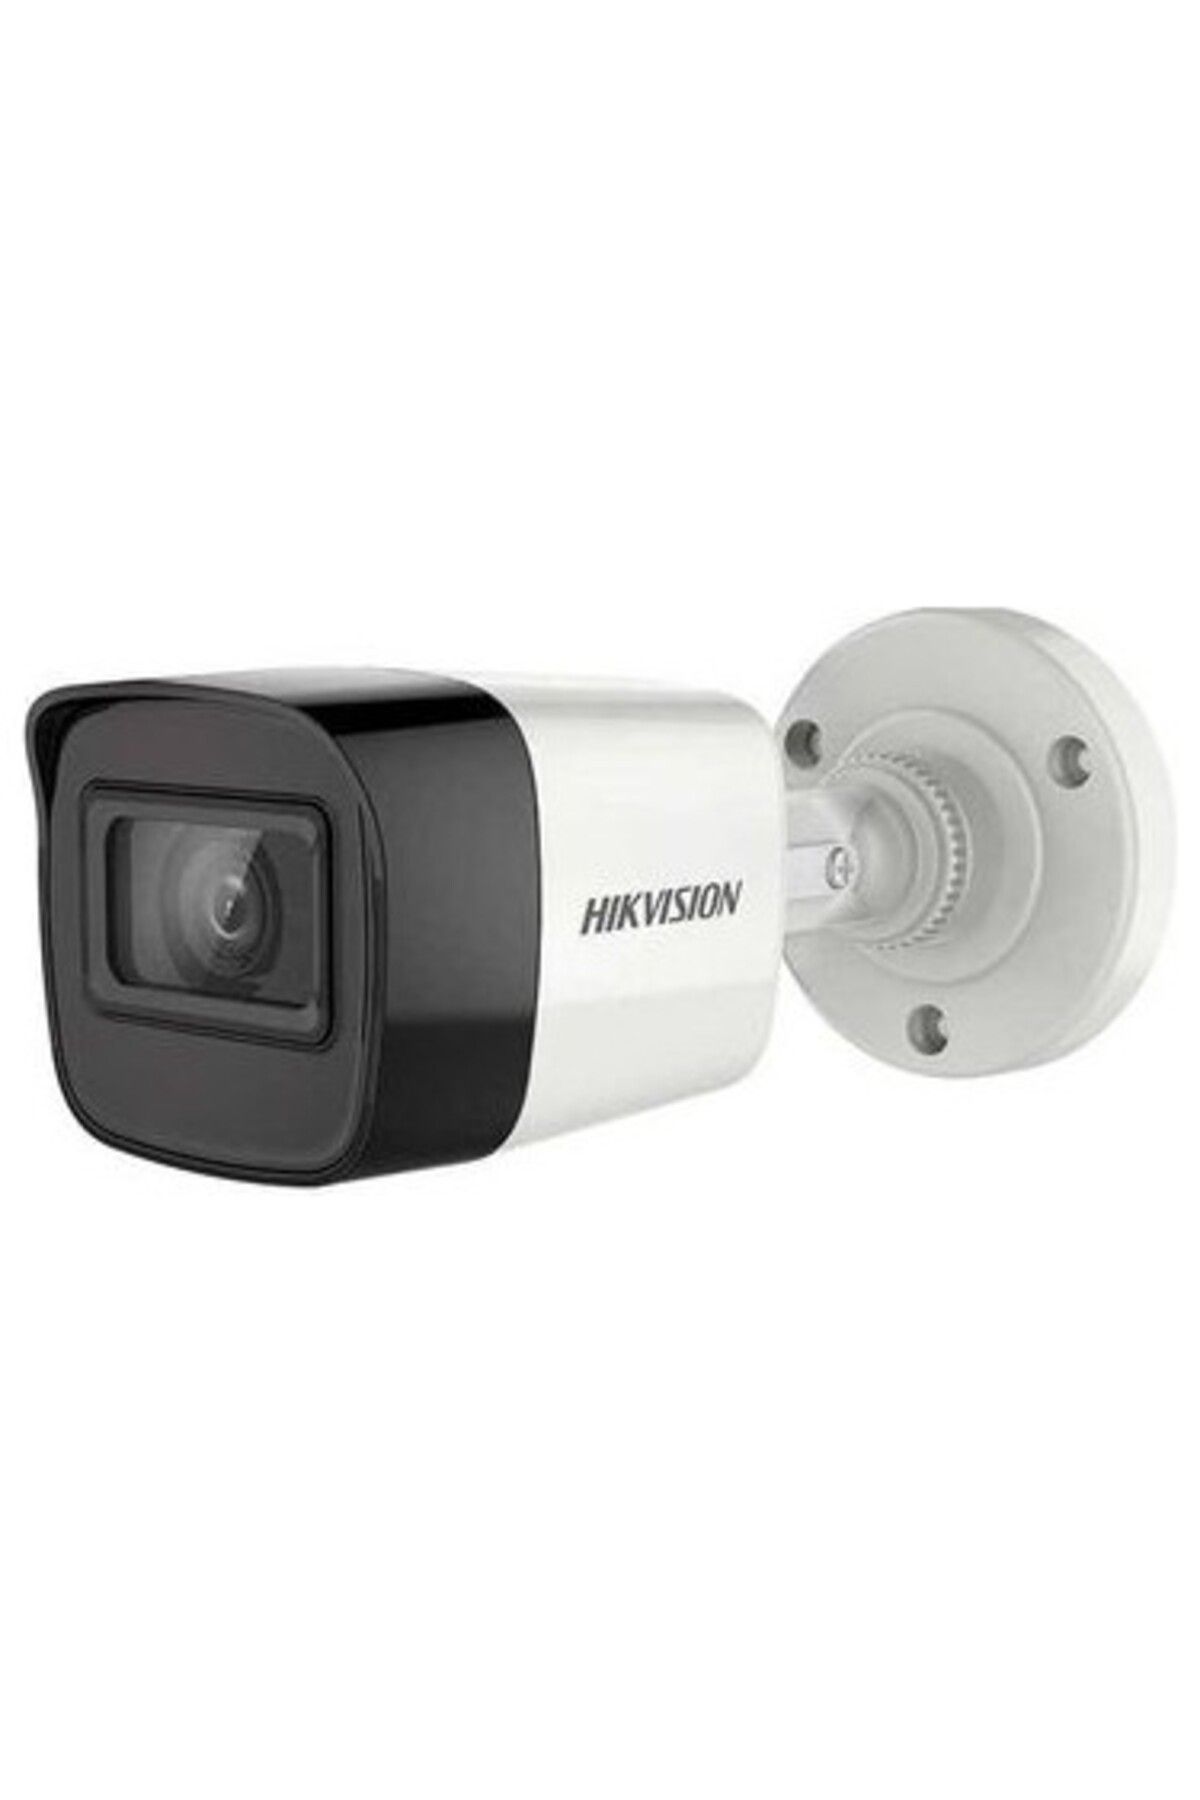 Hikvision Ds-2ce16d0t-exlpf 2 Mp 3.6 Mm Bullet Kamera